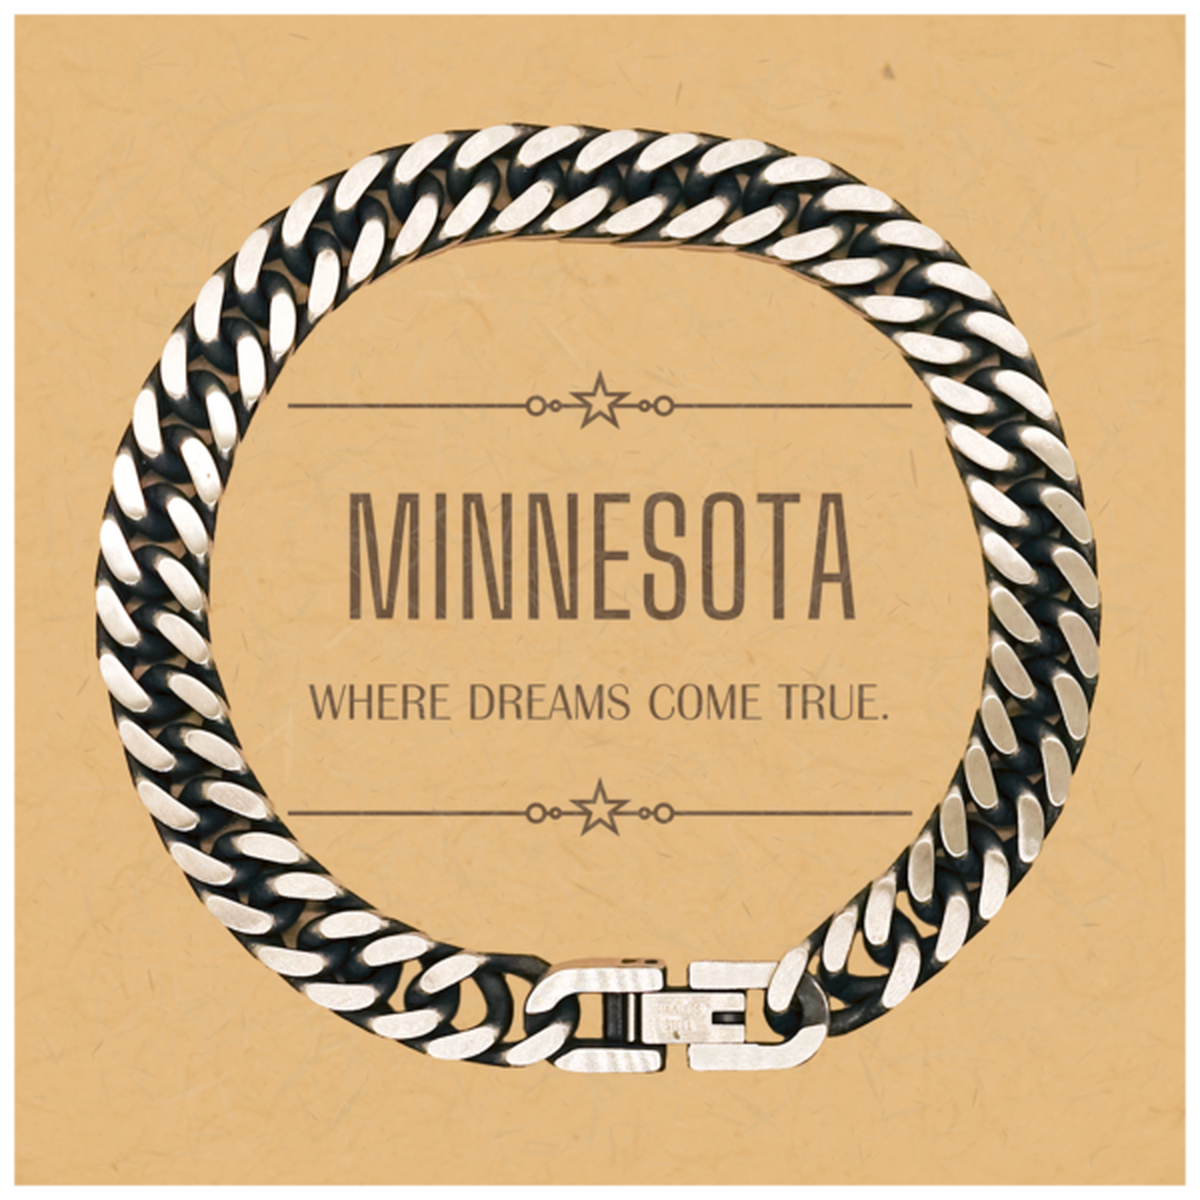 Love Minnesota State Cuban Link Chain Bracelet, Minnesota Where dreams come true, Birthday Christmas Inspirational Gifts For Minnesota Men, Women, Friends